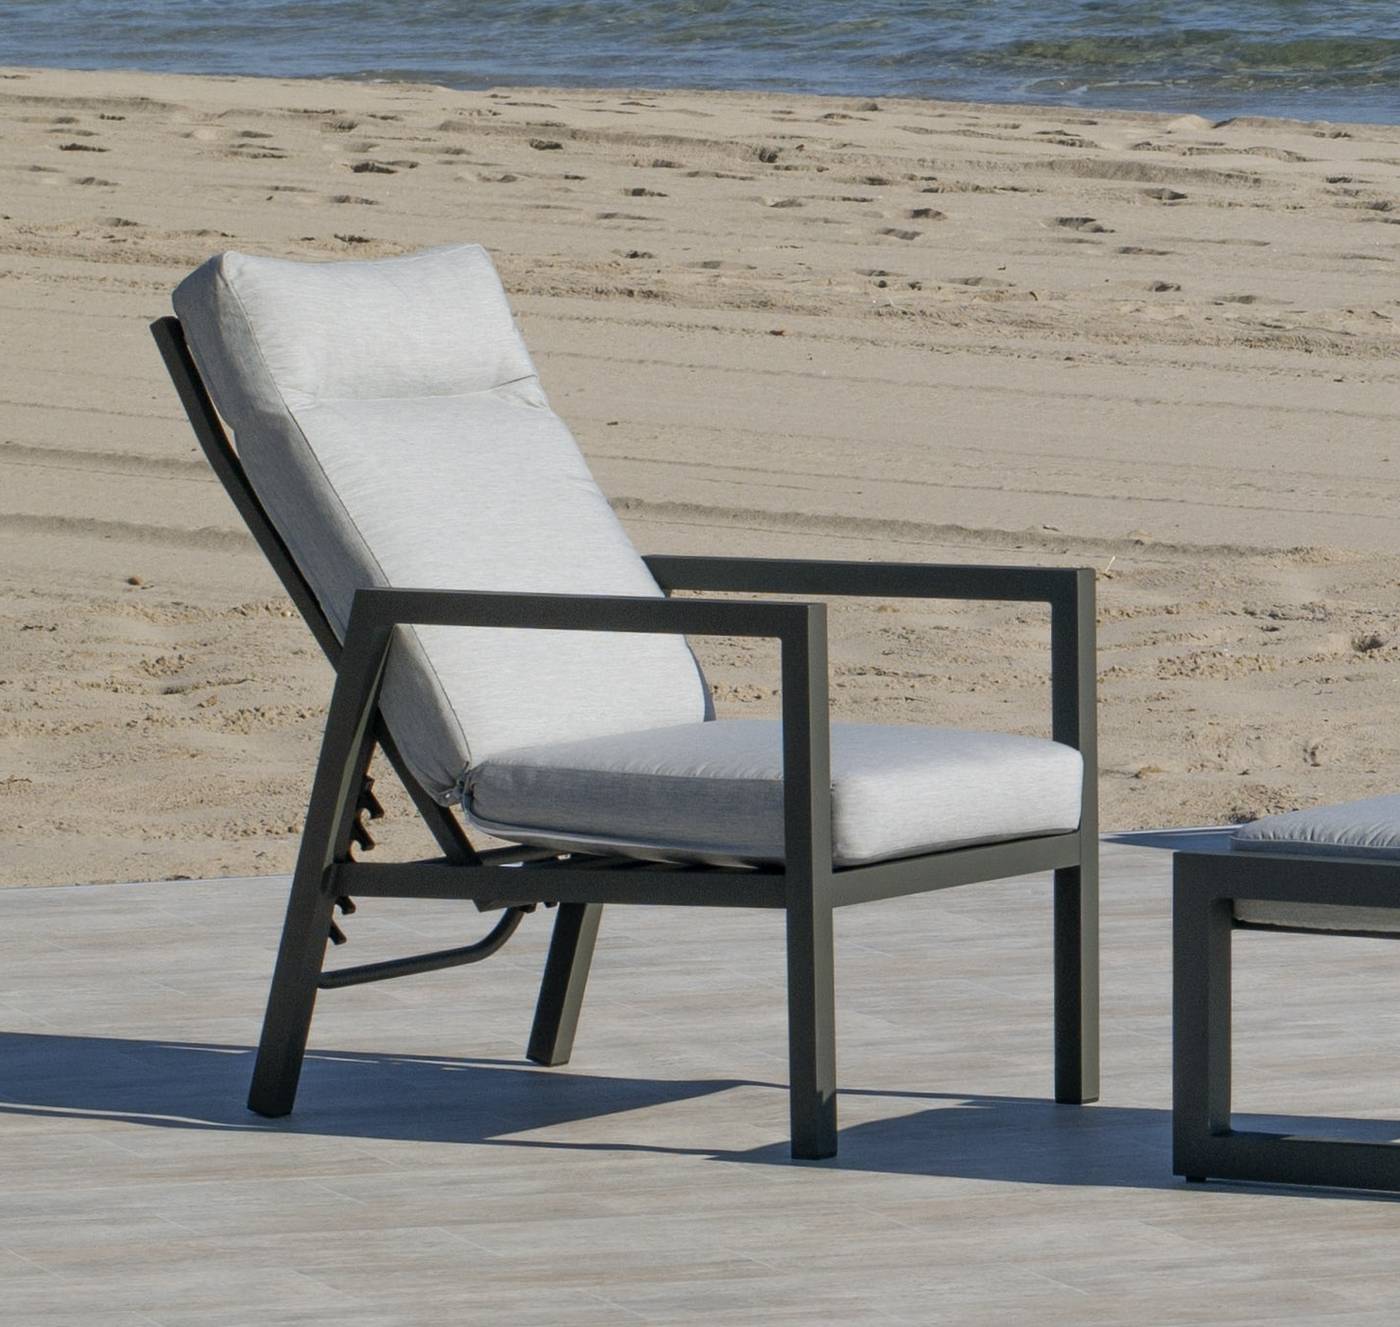 Set Aluminio Voriam-11 - Conjunto aluminio: sofá 3 plazas + 2 sillones + mesa de centro alta + 2 taburetes. Respaldos reclinables. Colores: blanco, antracita, champagne, plata o marrón.